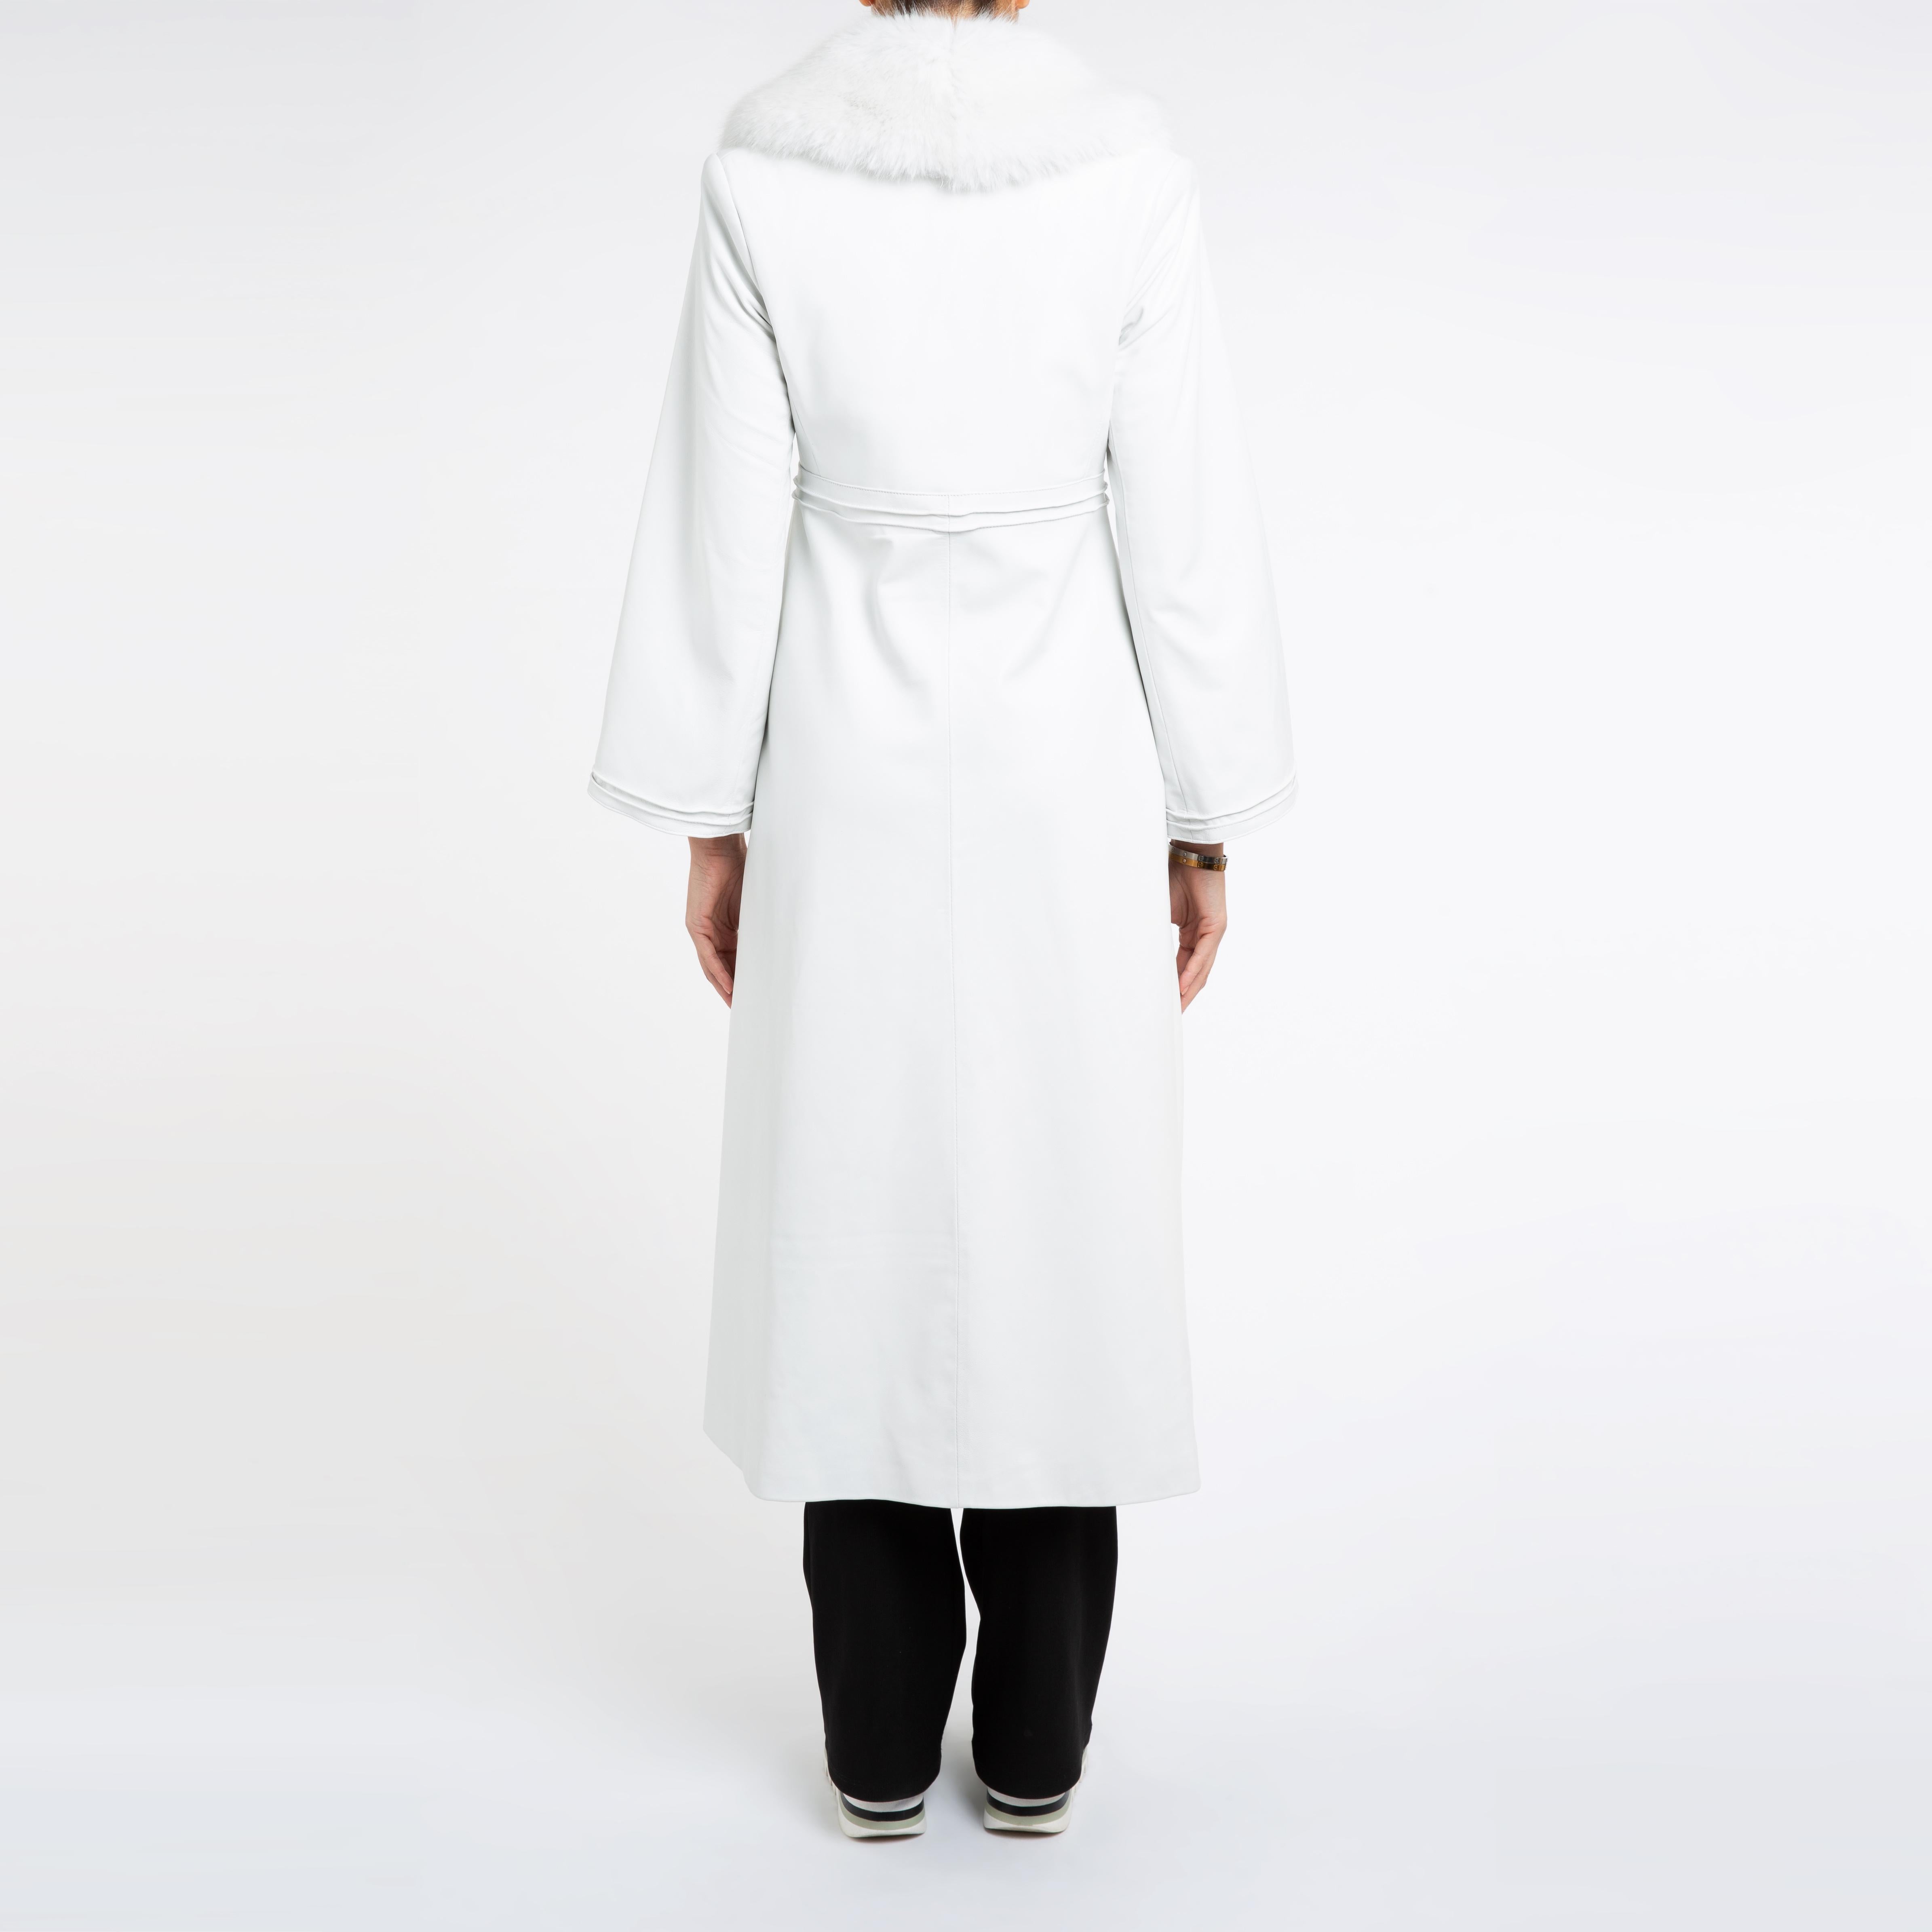 Verheyen London Edward Leather Coat in White with Faux Fur - Size uk 8  6